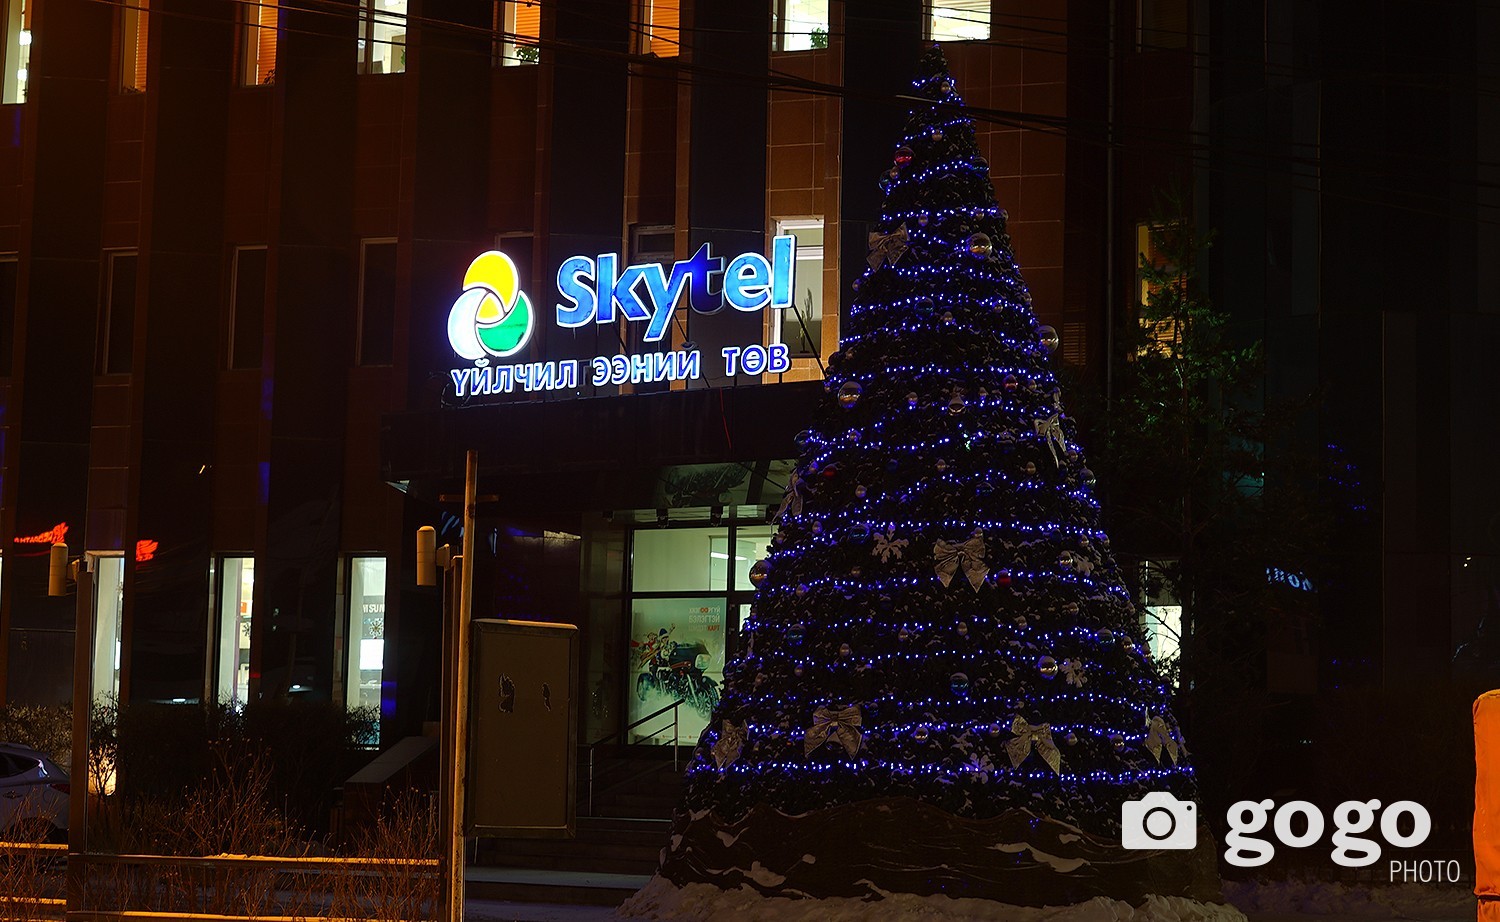 Skytel Group